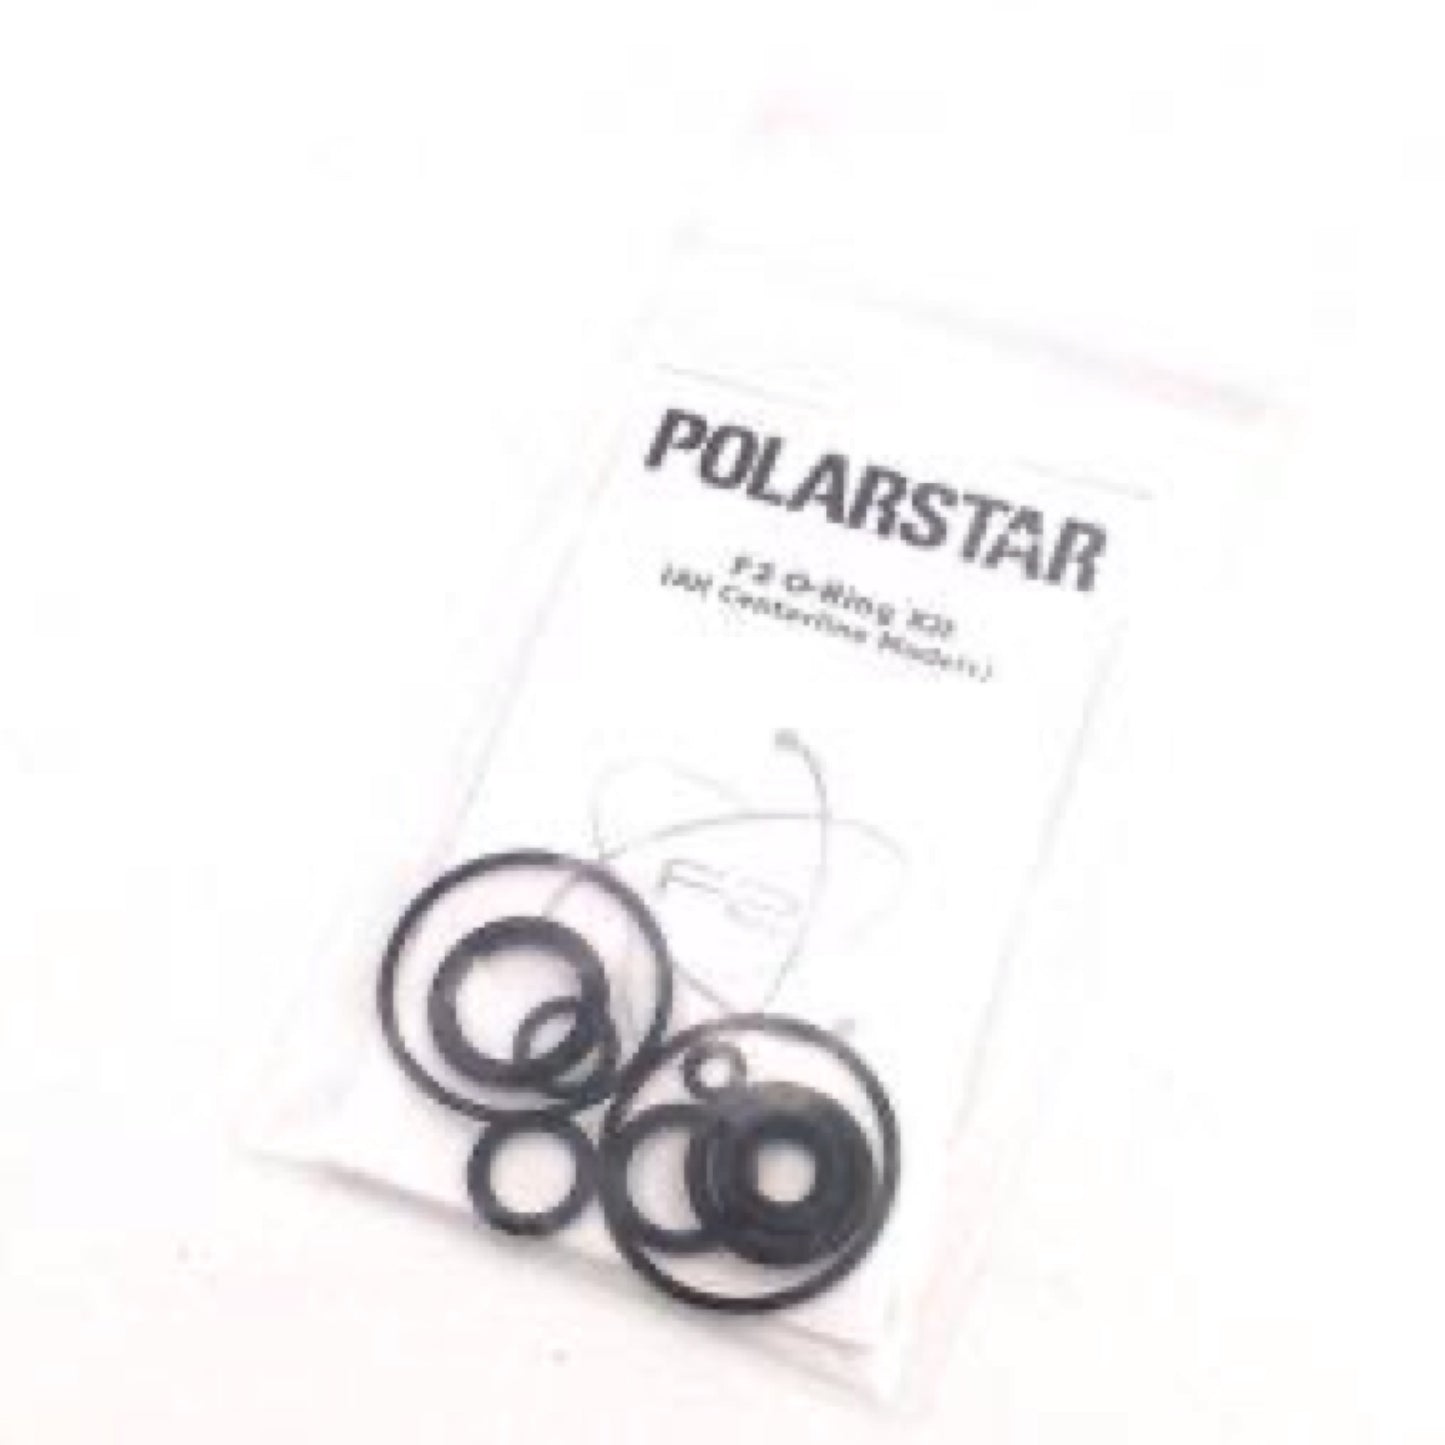 Polarstar F2 o-ring kit- Gel Blaster Parts & Accessories For Sale